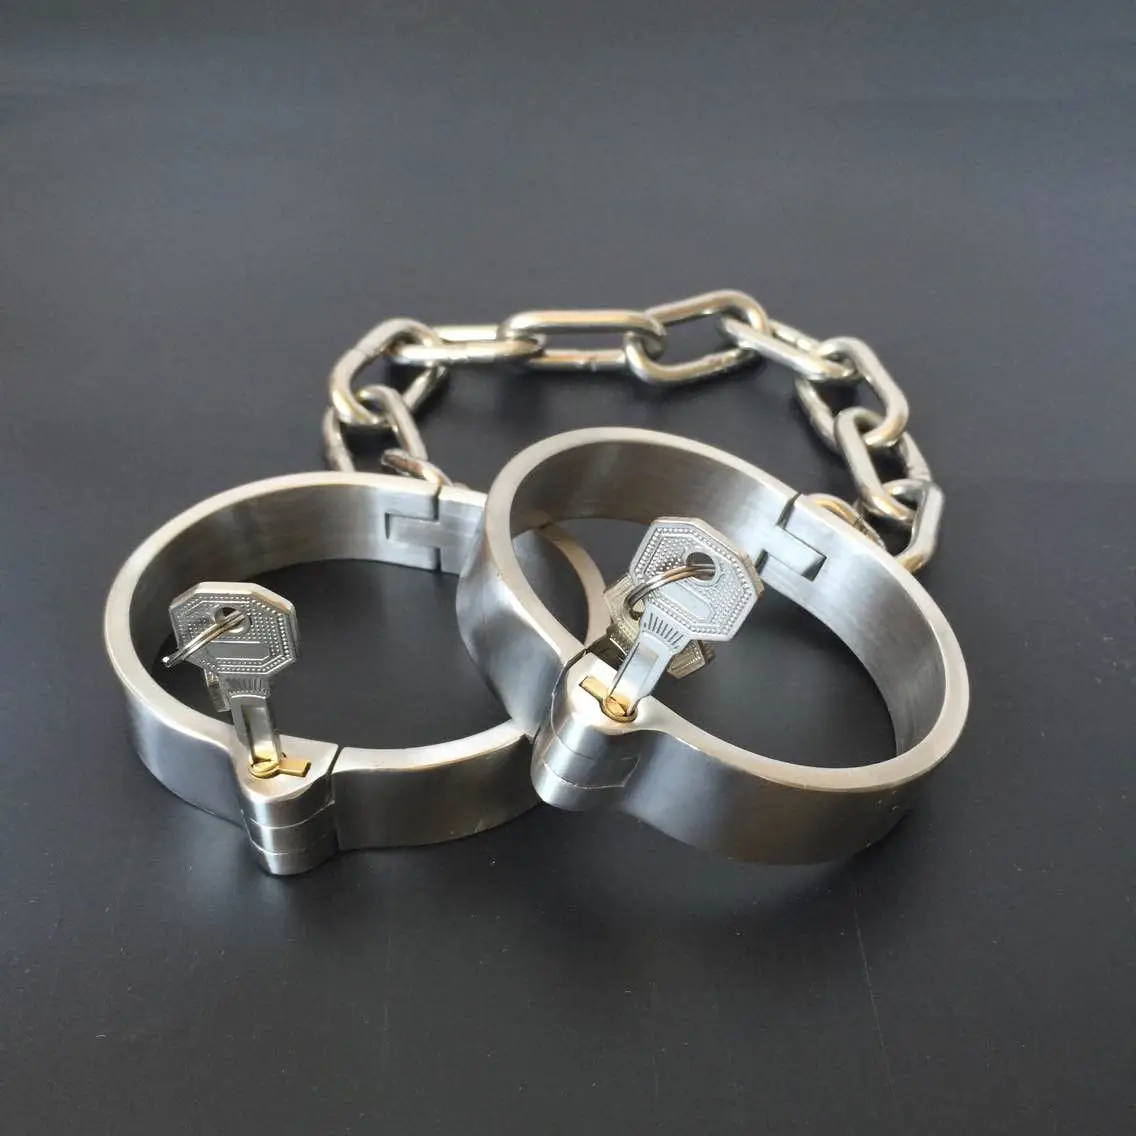 Stainless Steel Bdsm Bondage Legcuffs Bondage Restraints Anklet Cuffs Bdsm Fetish Wear Adult